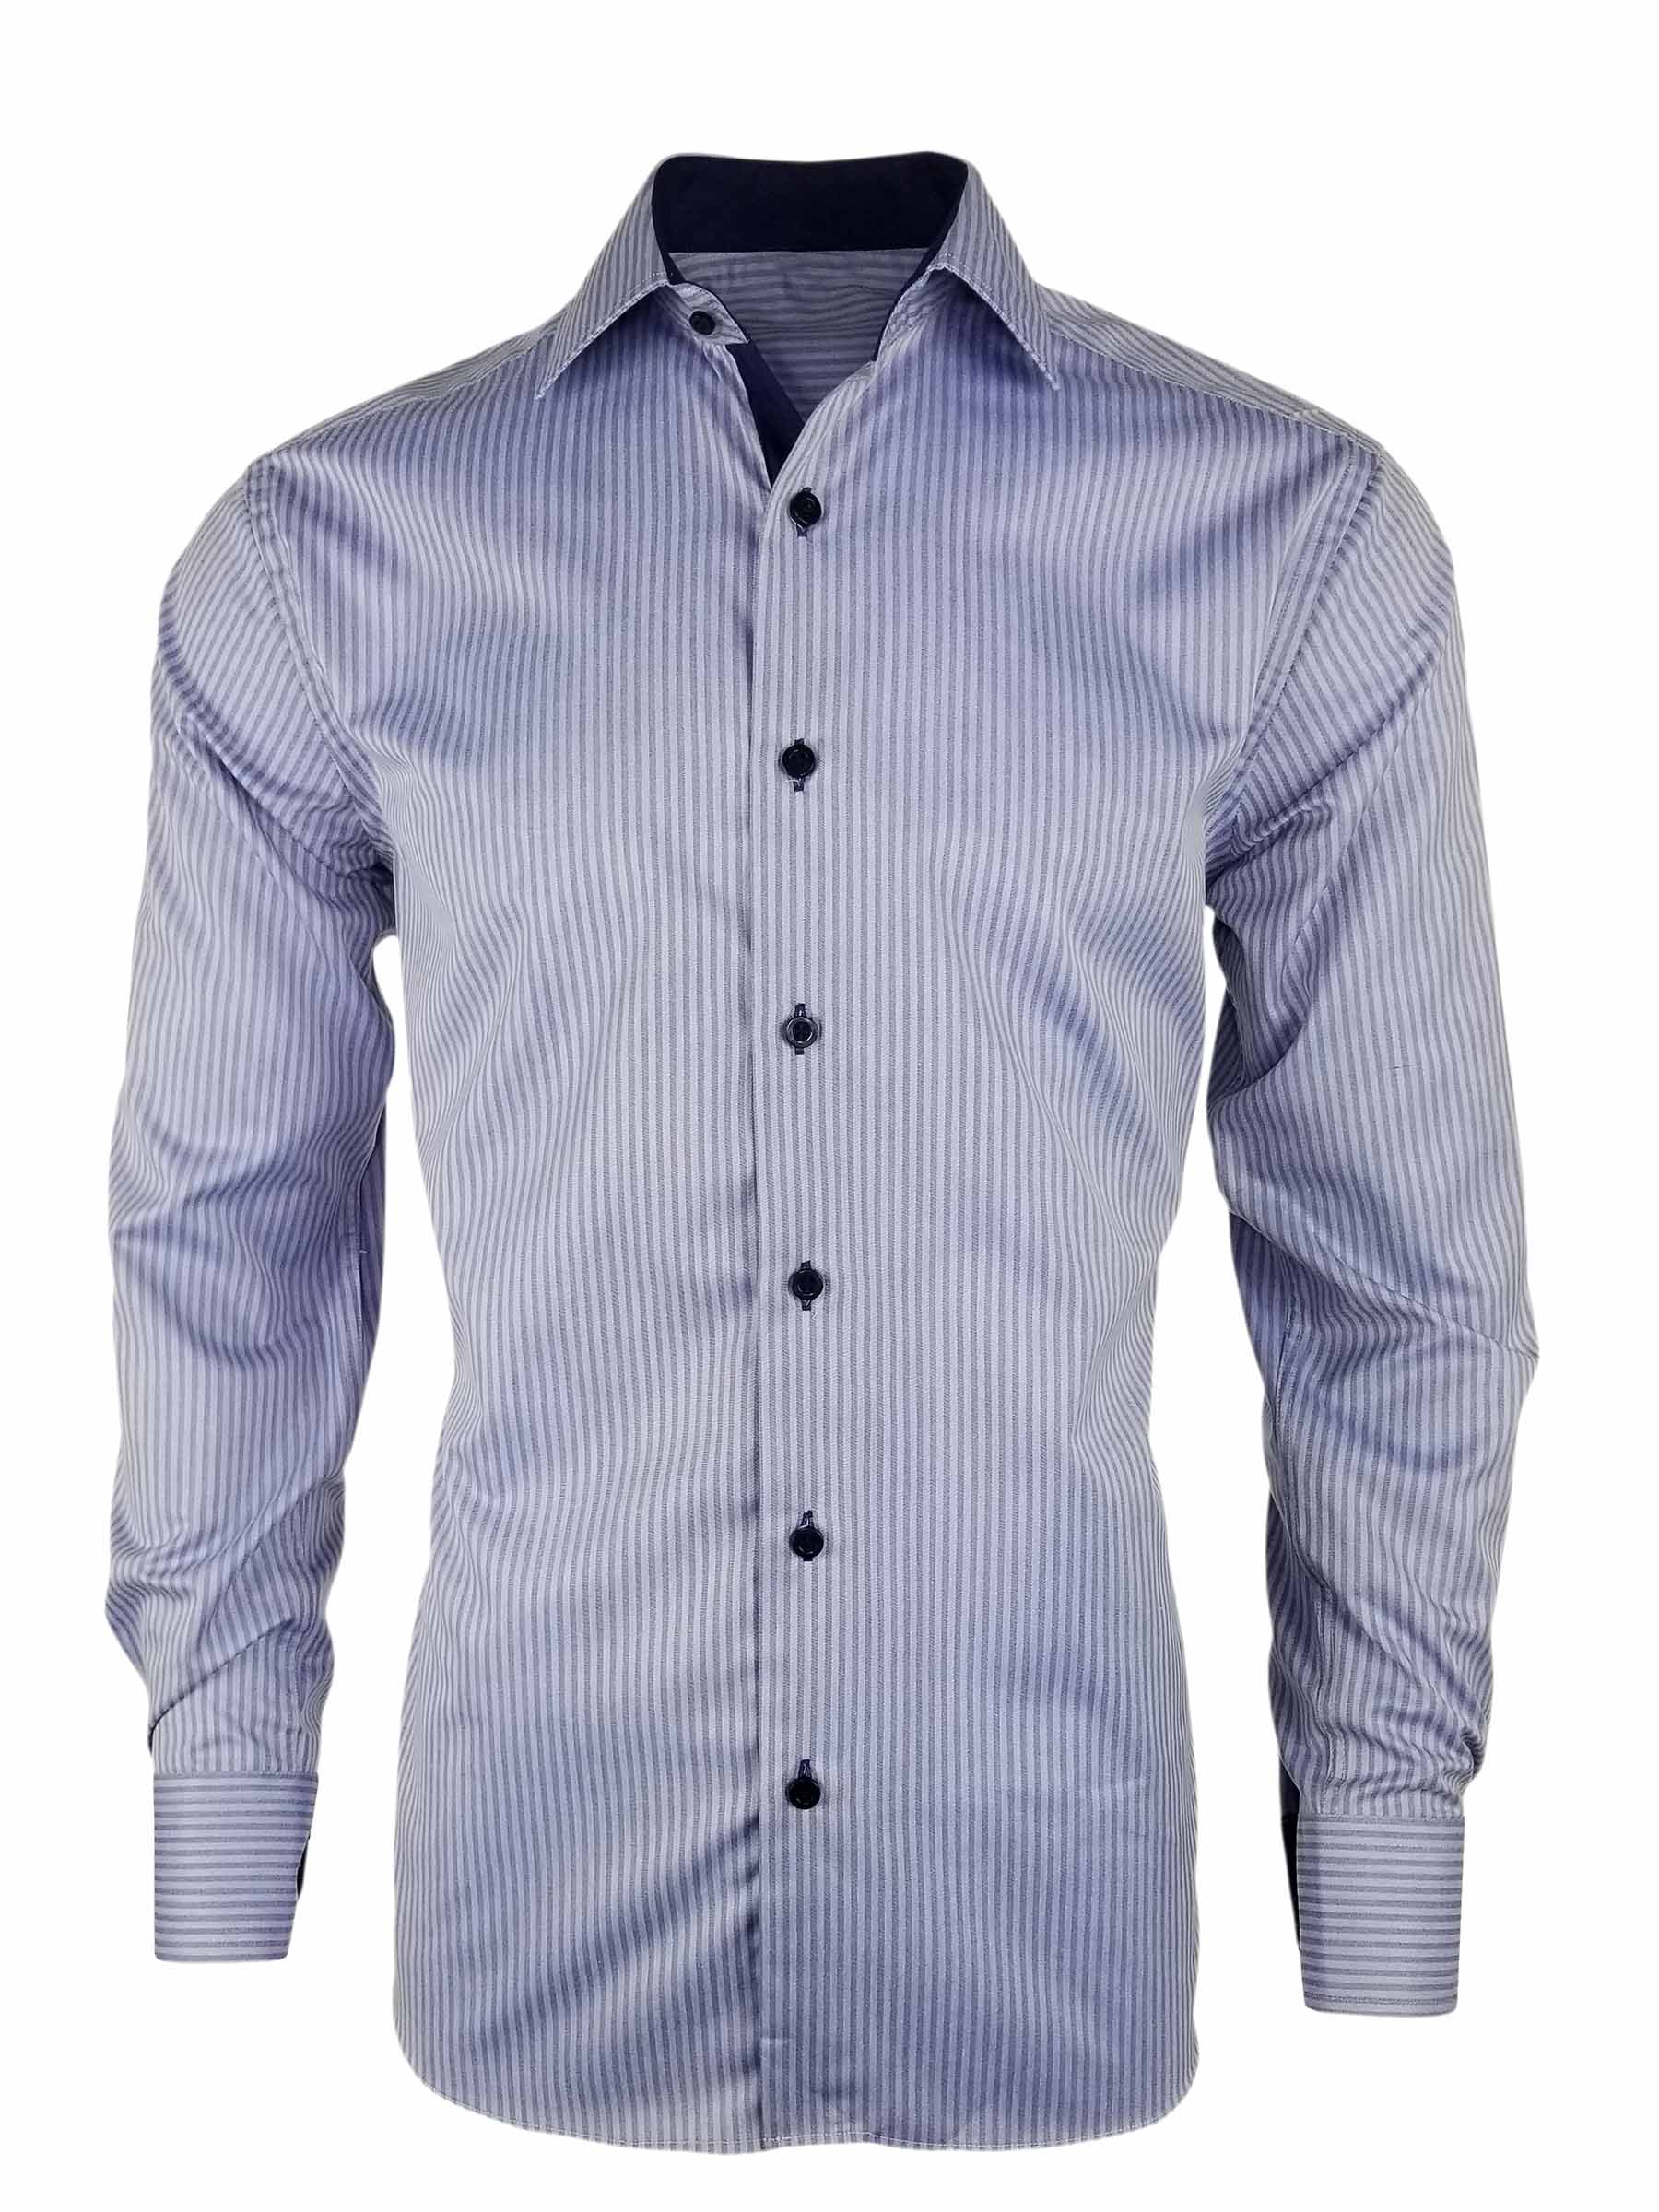 Men's Blue Self Stripe with Navy Contrast Shirt - Long Sleeve - Uniform ...